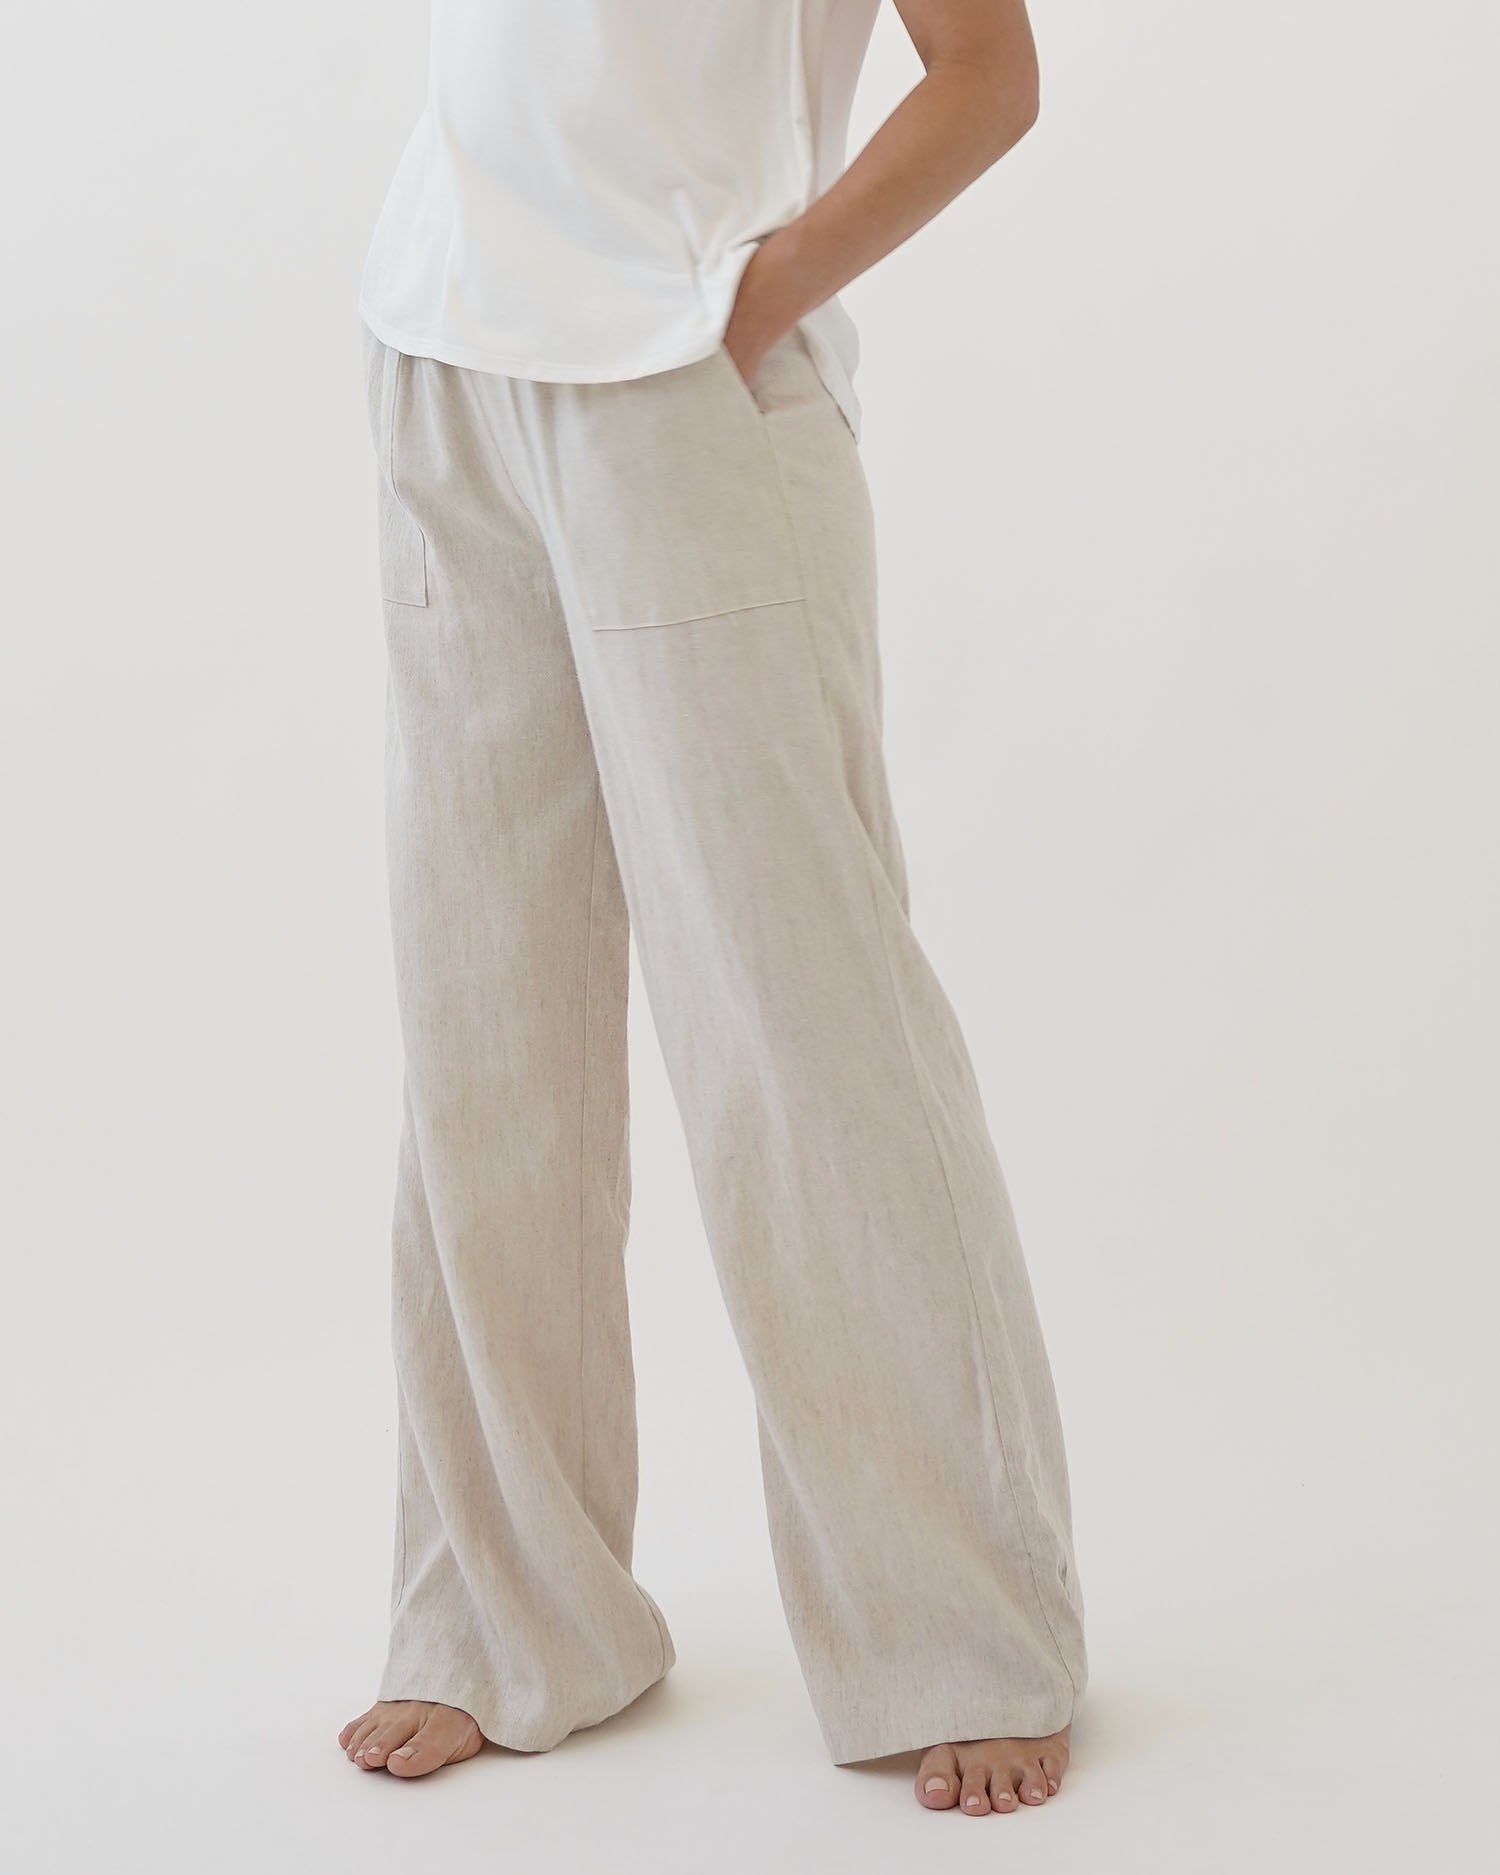 Women's Wide Leg Pants Trousers White Khaki Fashion coastal grandma style  Casual Daily Side Pockets Print M…